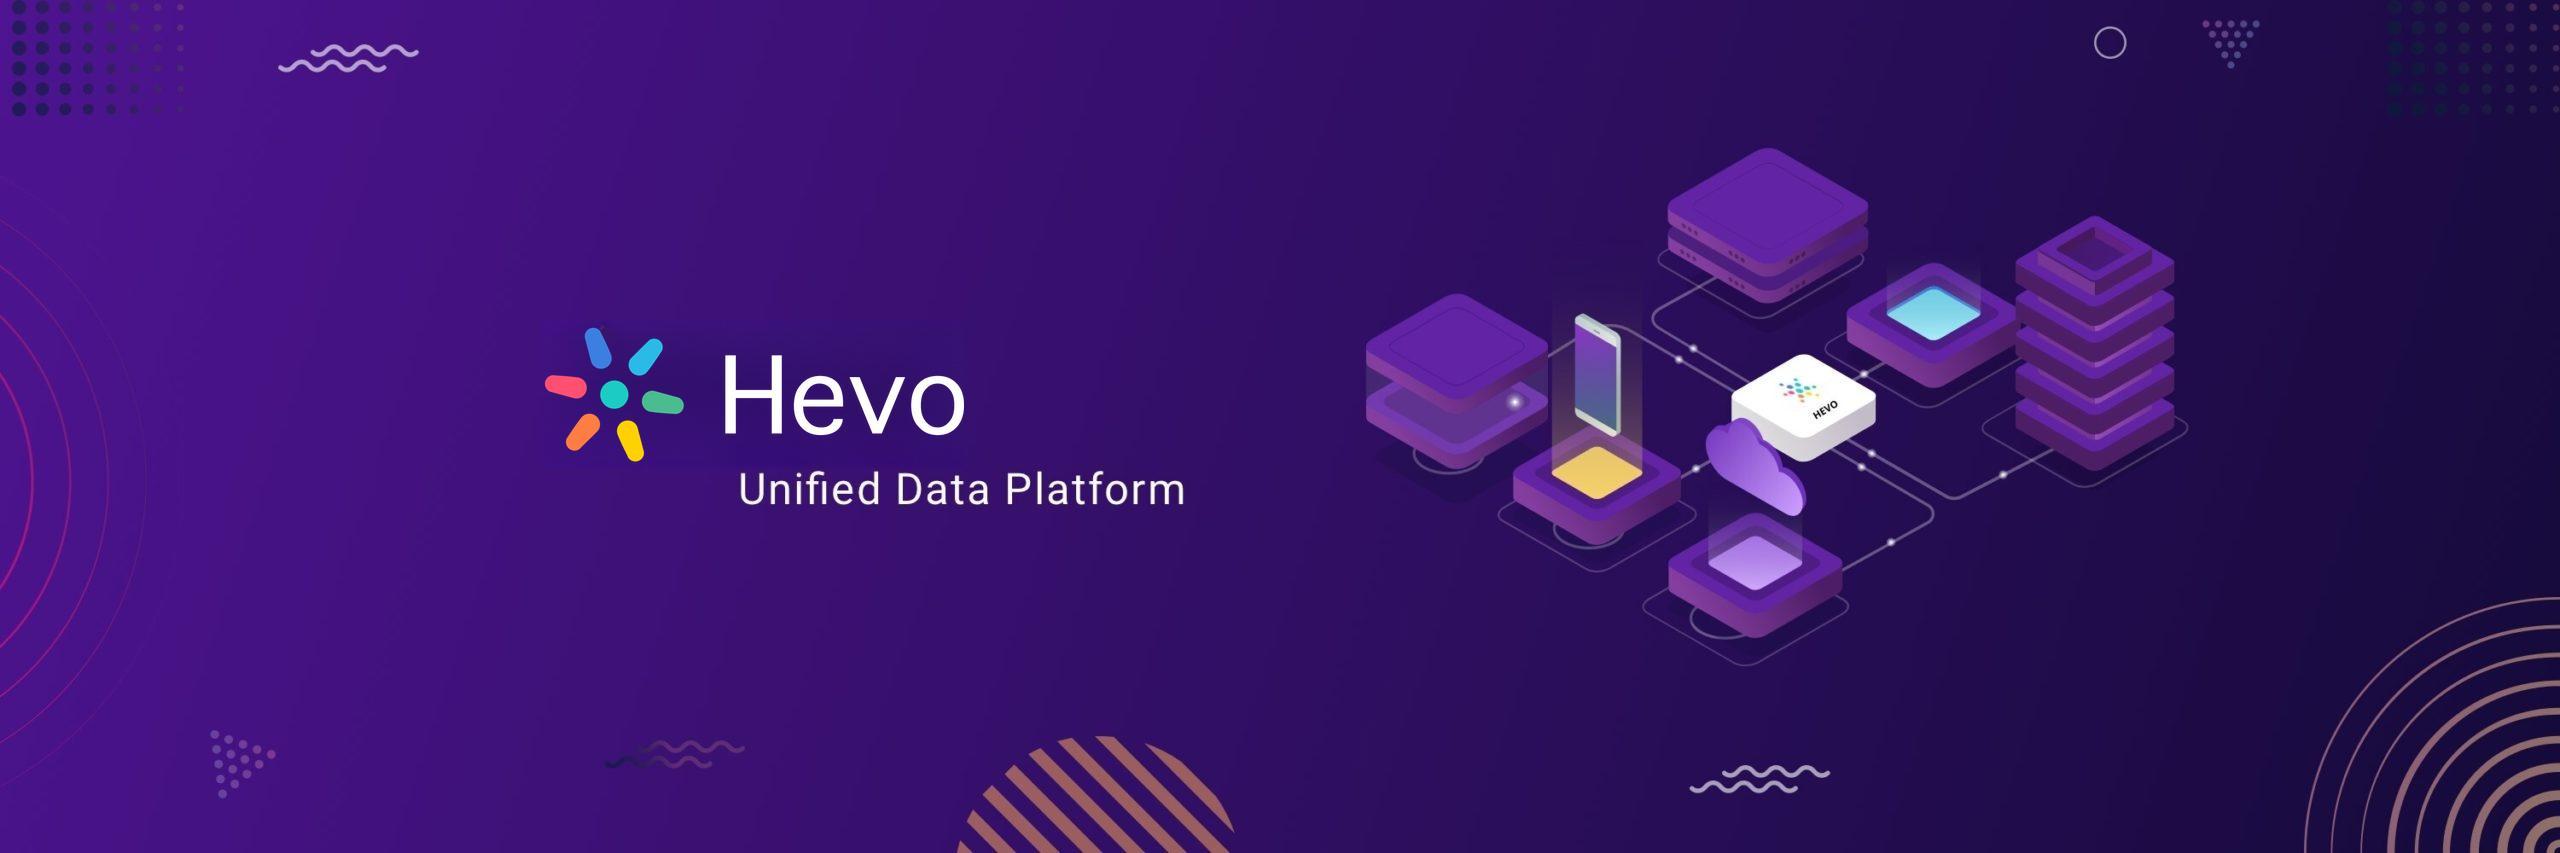 Hevo Cover Image - Firebase Data Studio 